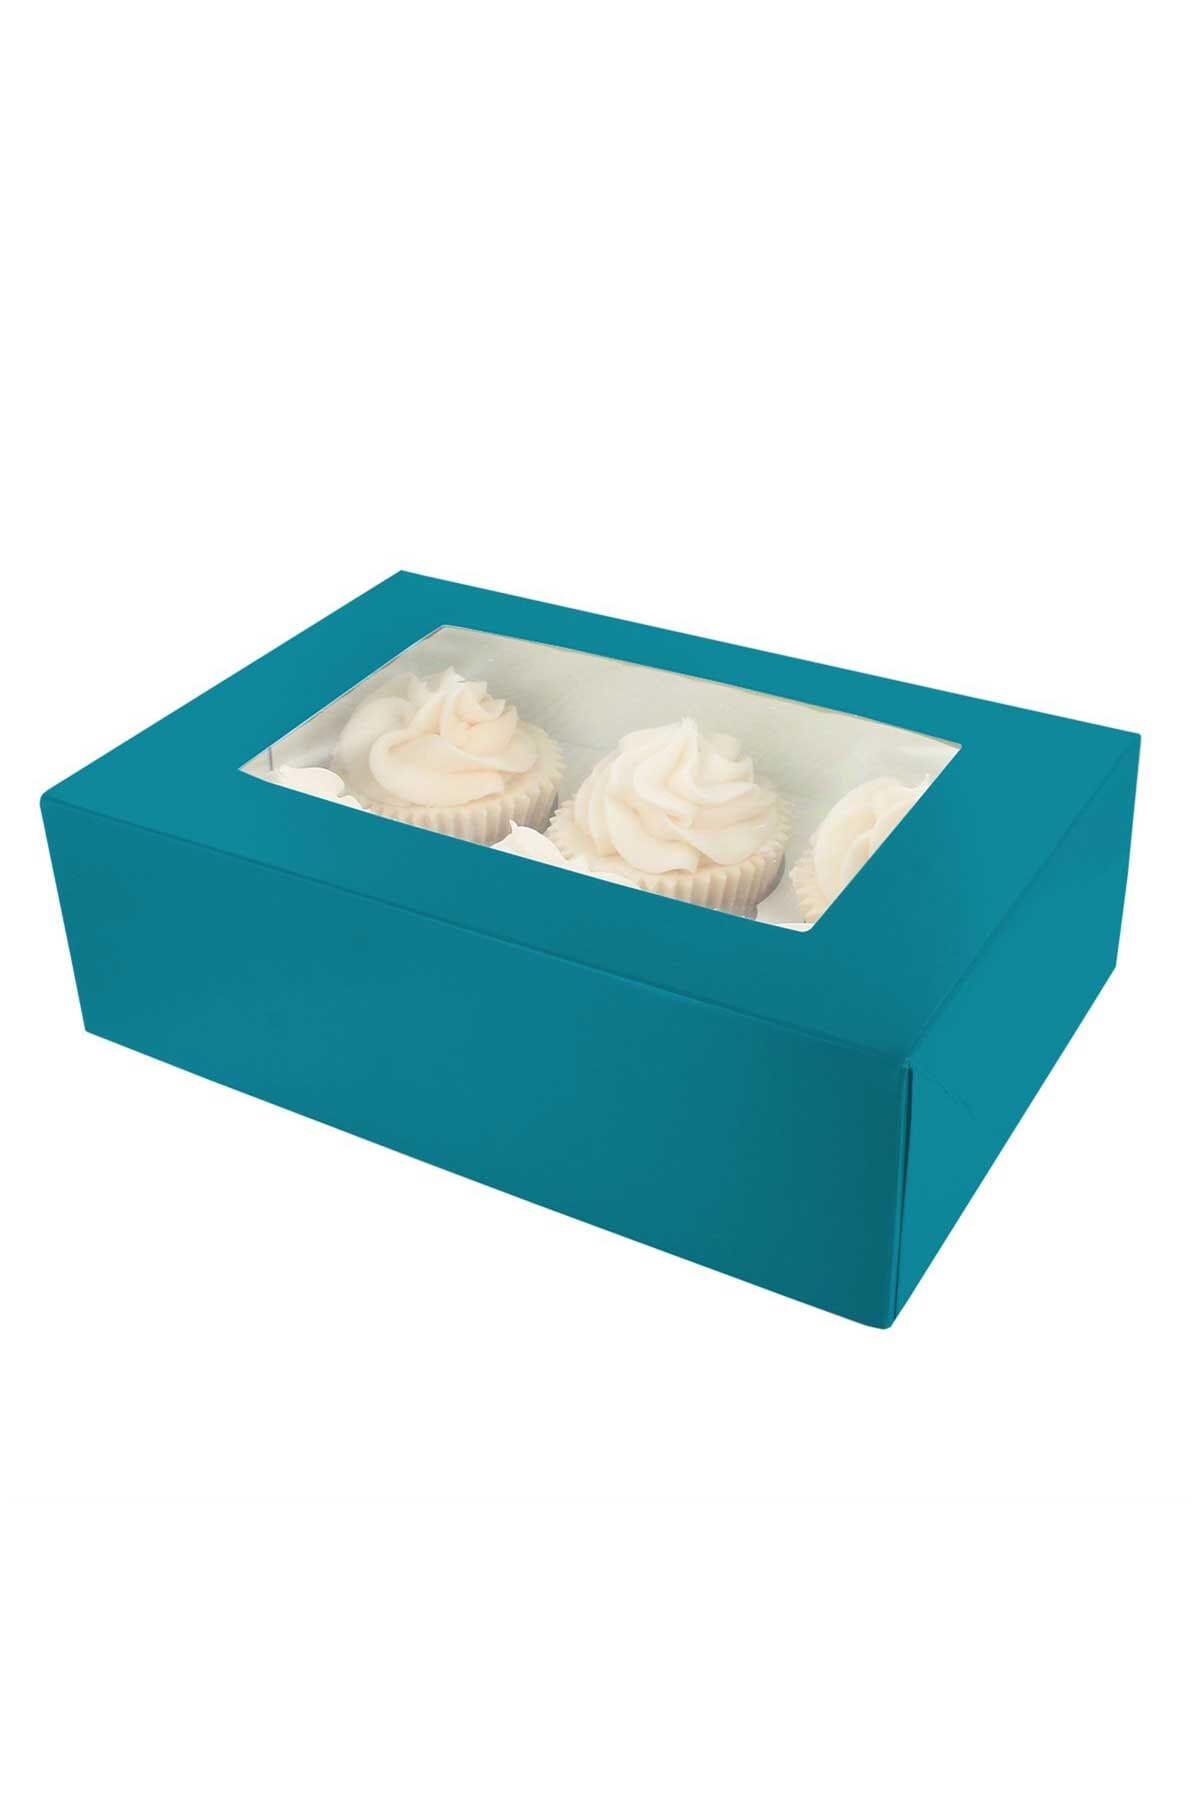 6 Hole Cupcake Box - Teal Blue Cake Box Sprinkly 